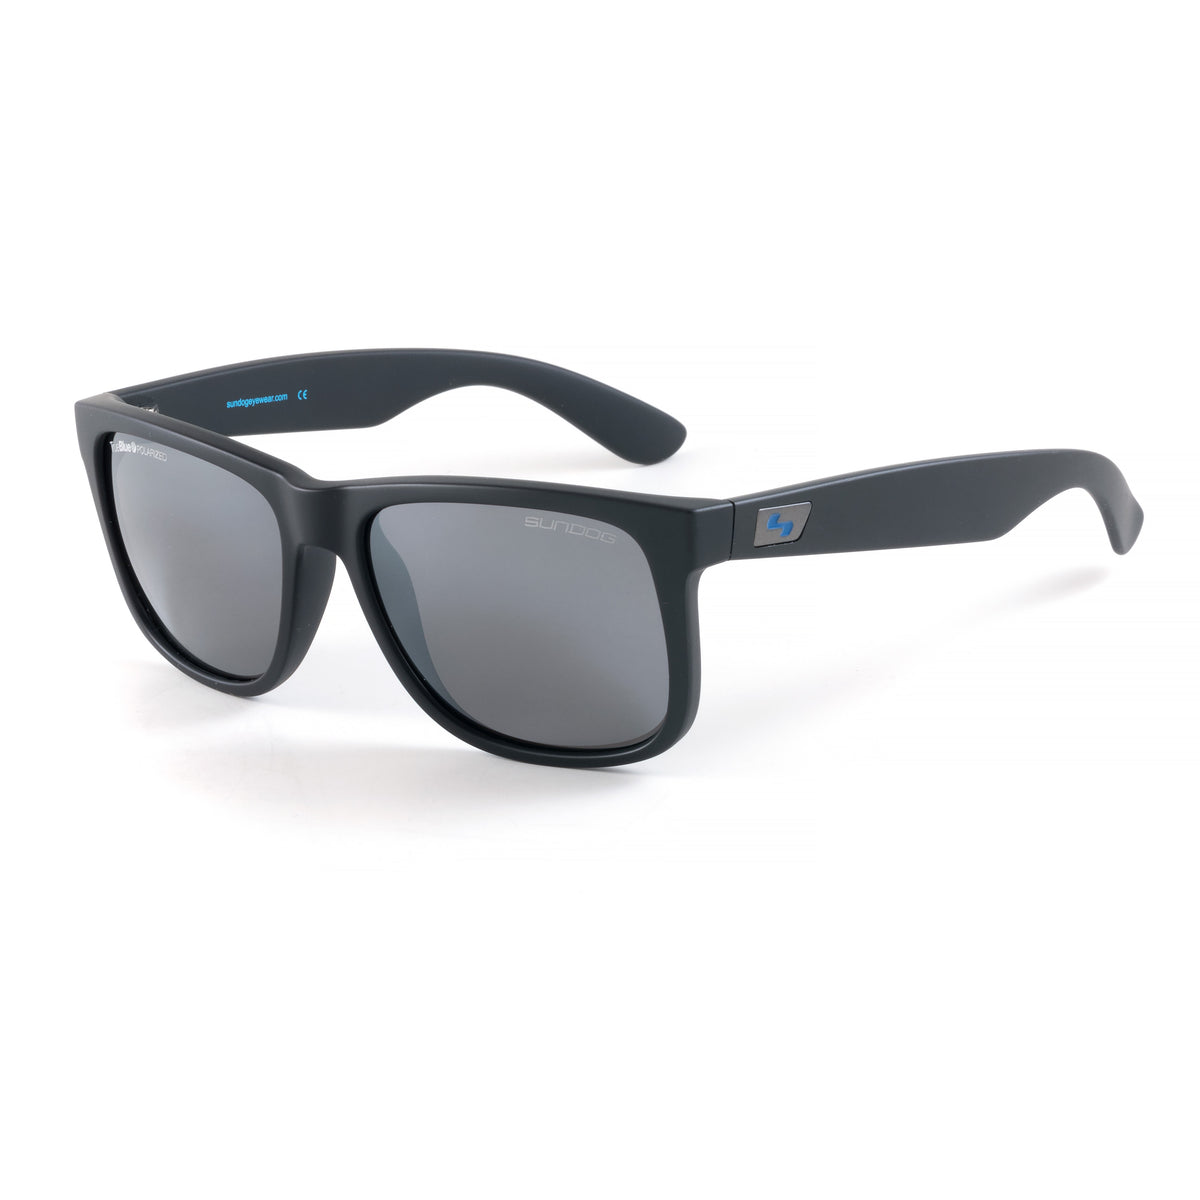 Sundog Eyewear Prime EXT Sunglasses, Grey, Copper Lens 